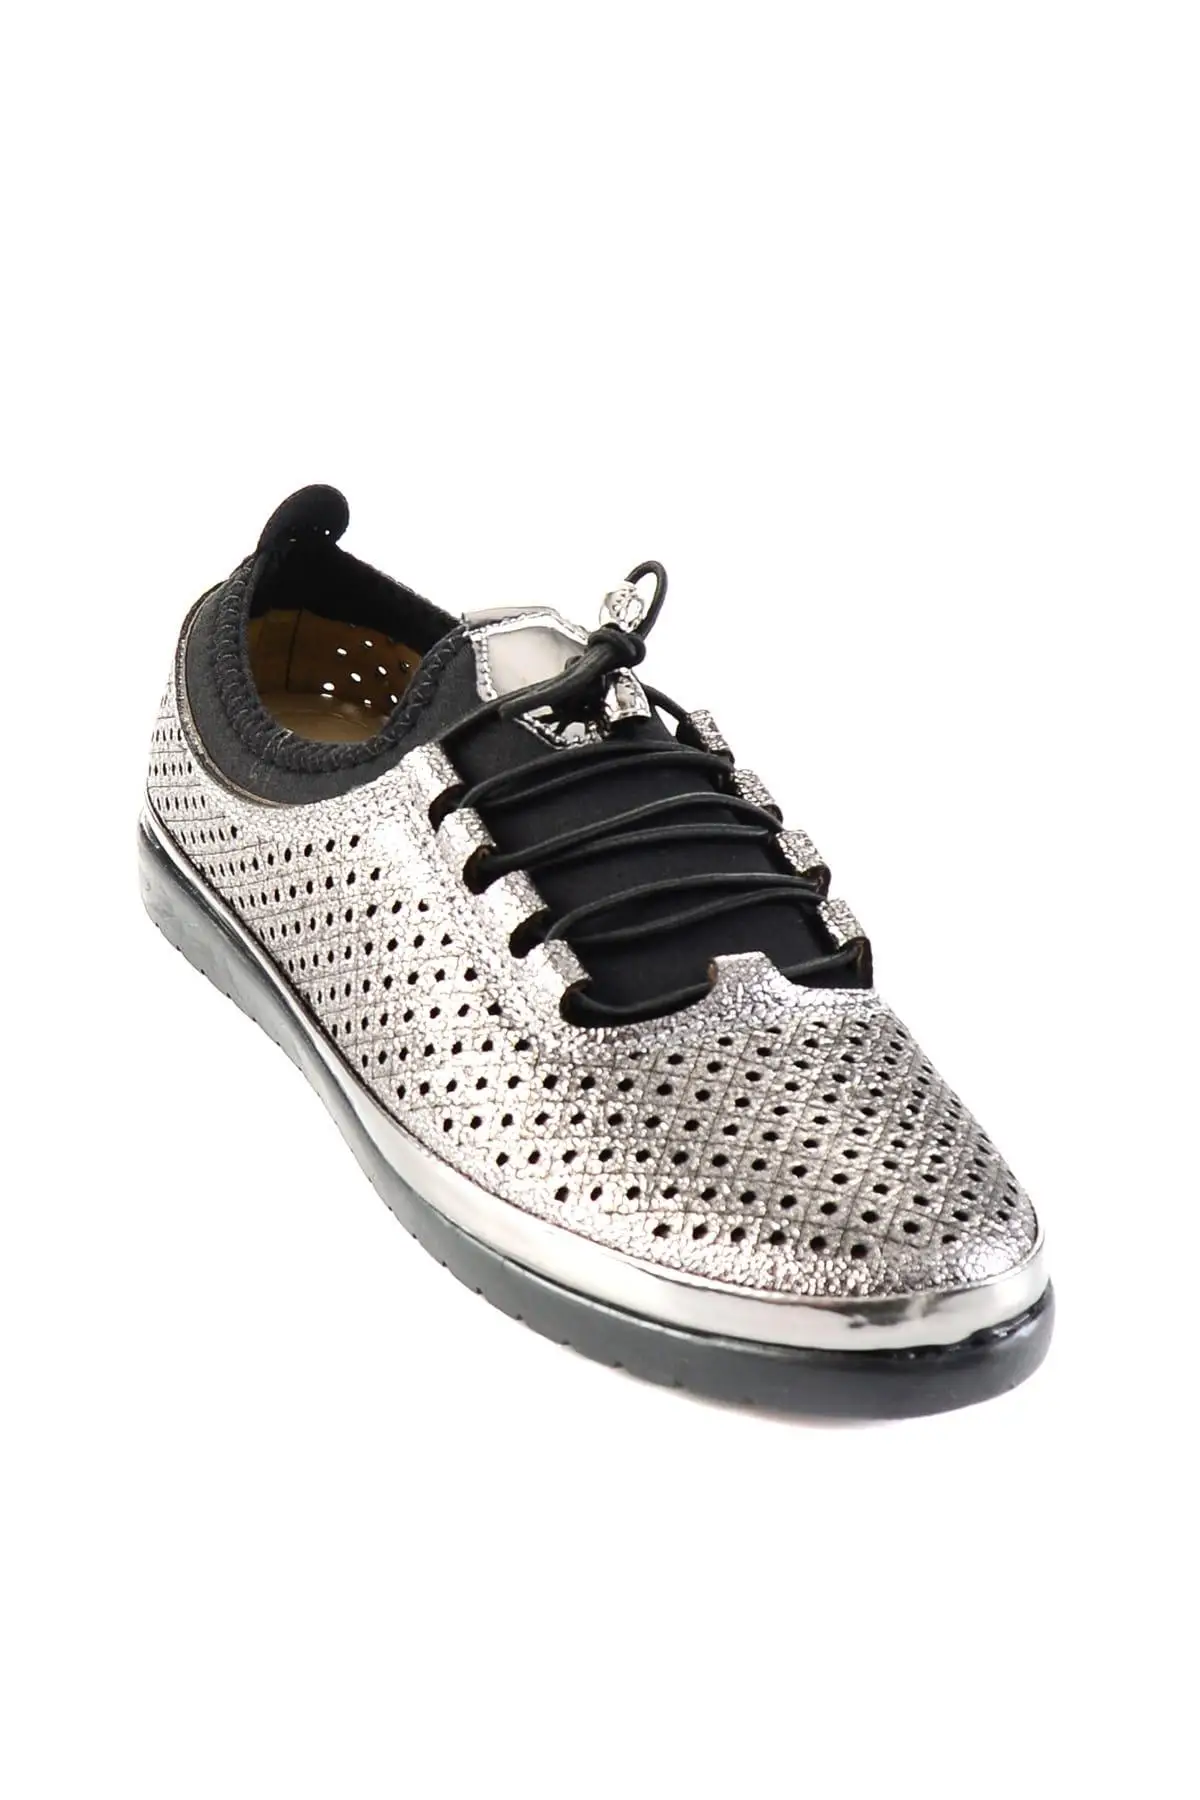 Bambi Platinum Women 'S Shoes H05016001 | Обувь